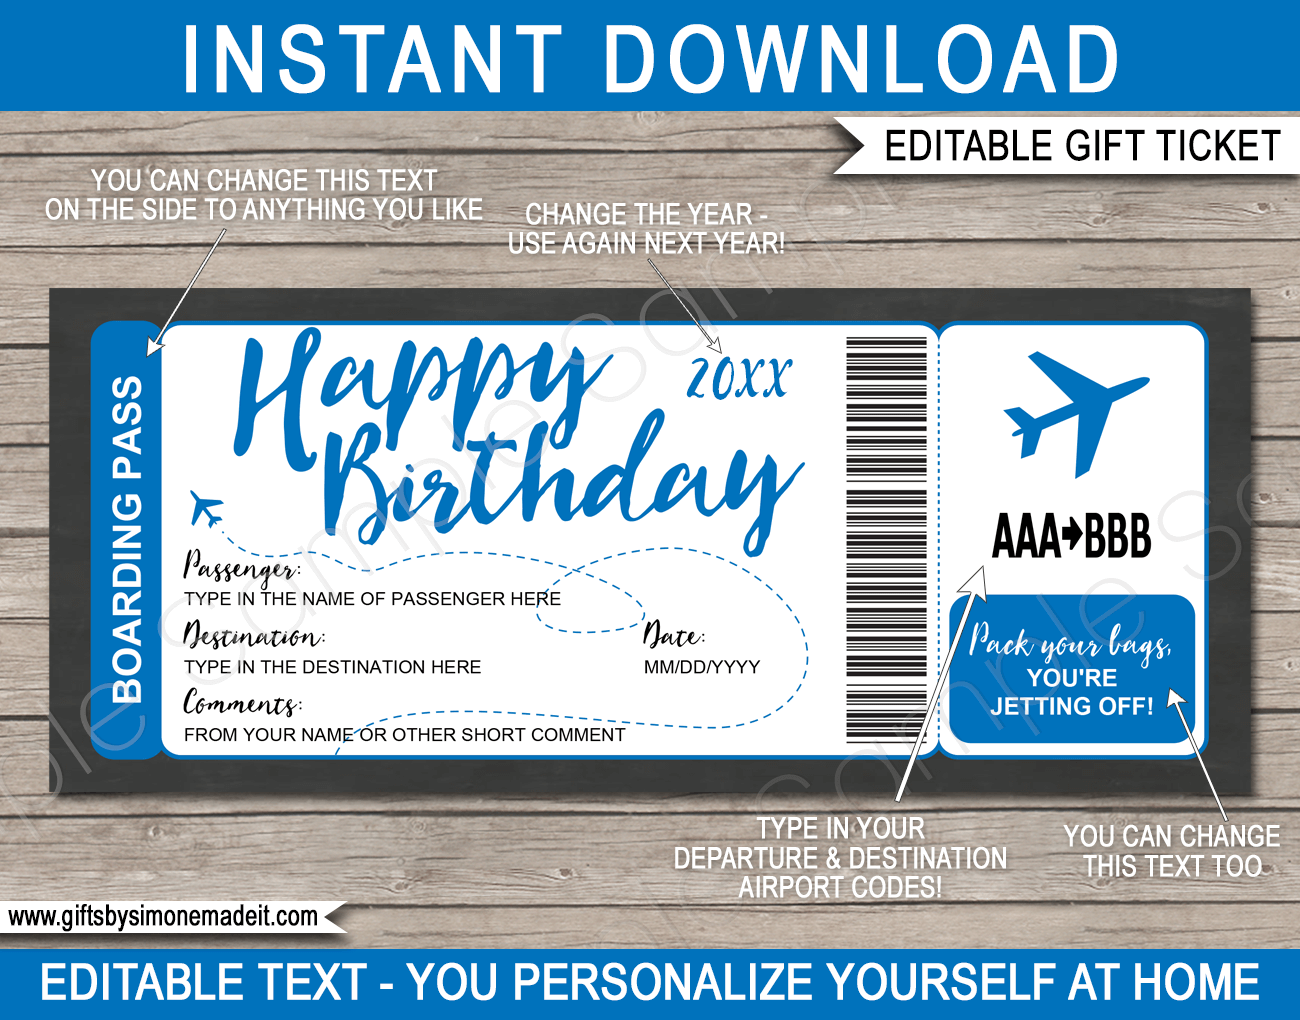 Printable Blue Birthday Surprise Trip Boarding Pass Template | Fake Plane Ticket Gift | Surprise Birthday Trip Reveal | Flight, Holiday, Getaway, Vacation | INSTANT DOWNLOAD via giftsbysimonemadeit.com